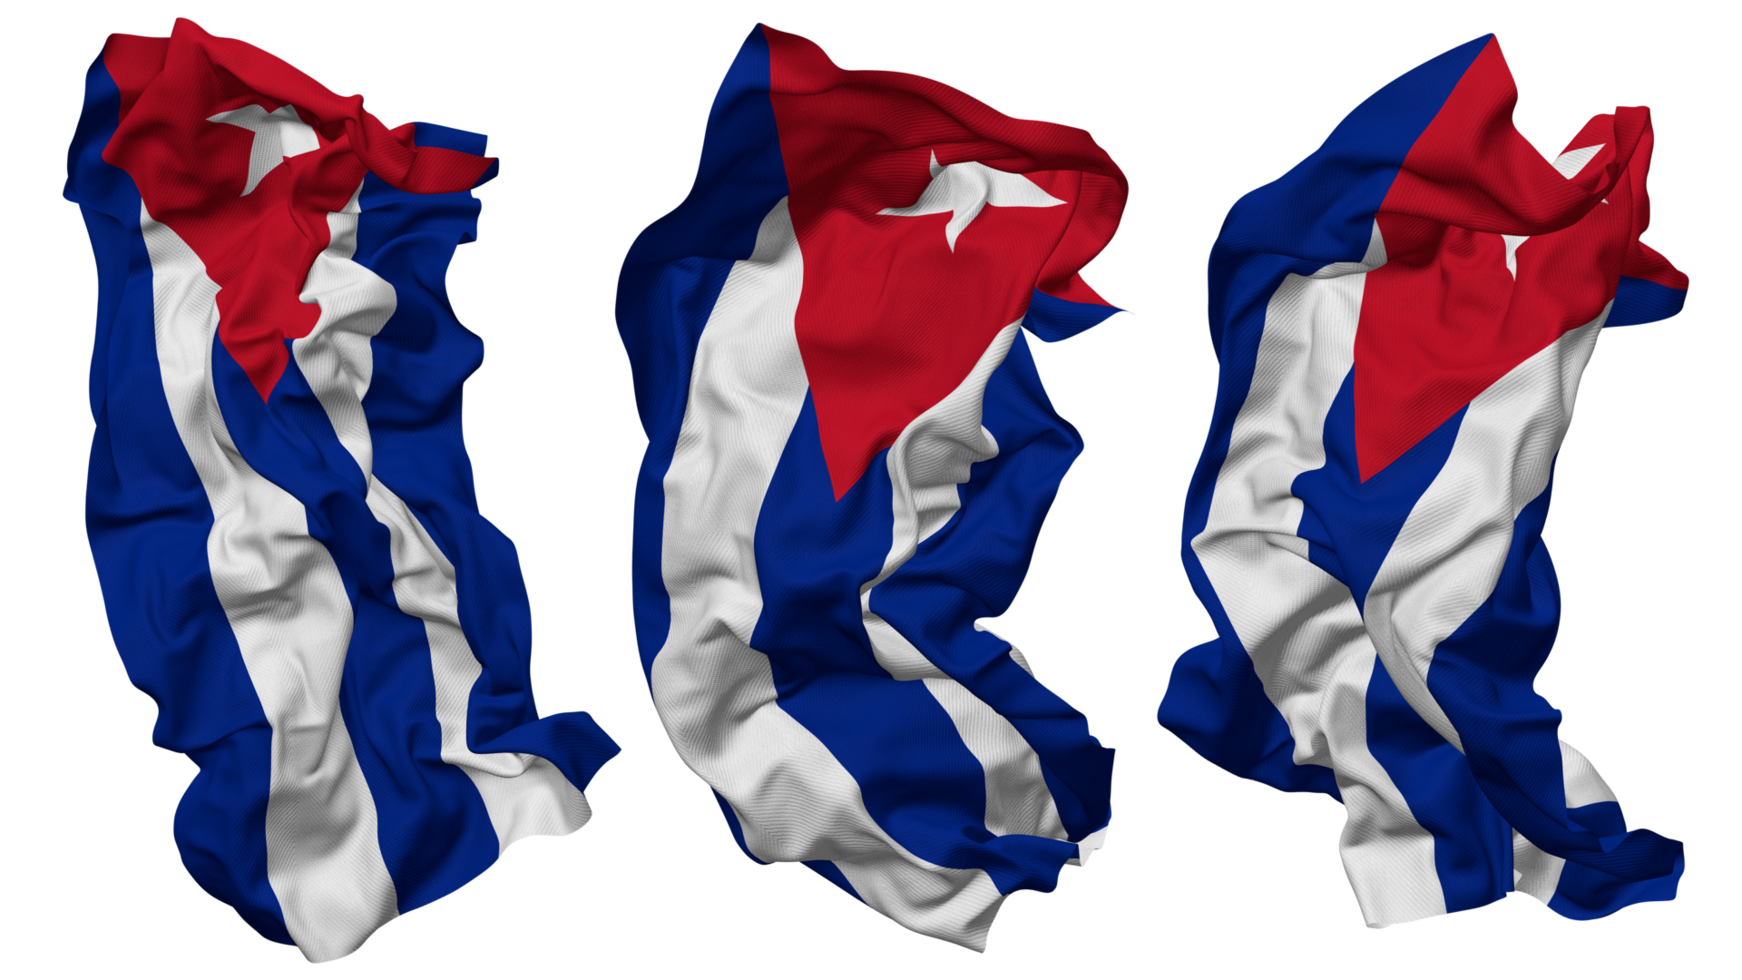 Cuba bandera olas aislado en diferente estilos con bache textura, 3d representación png